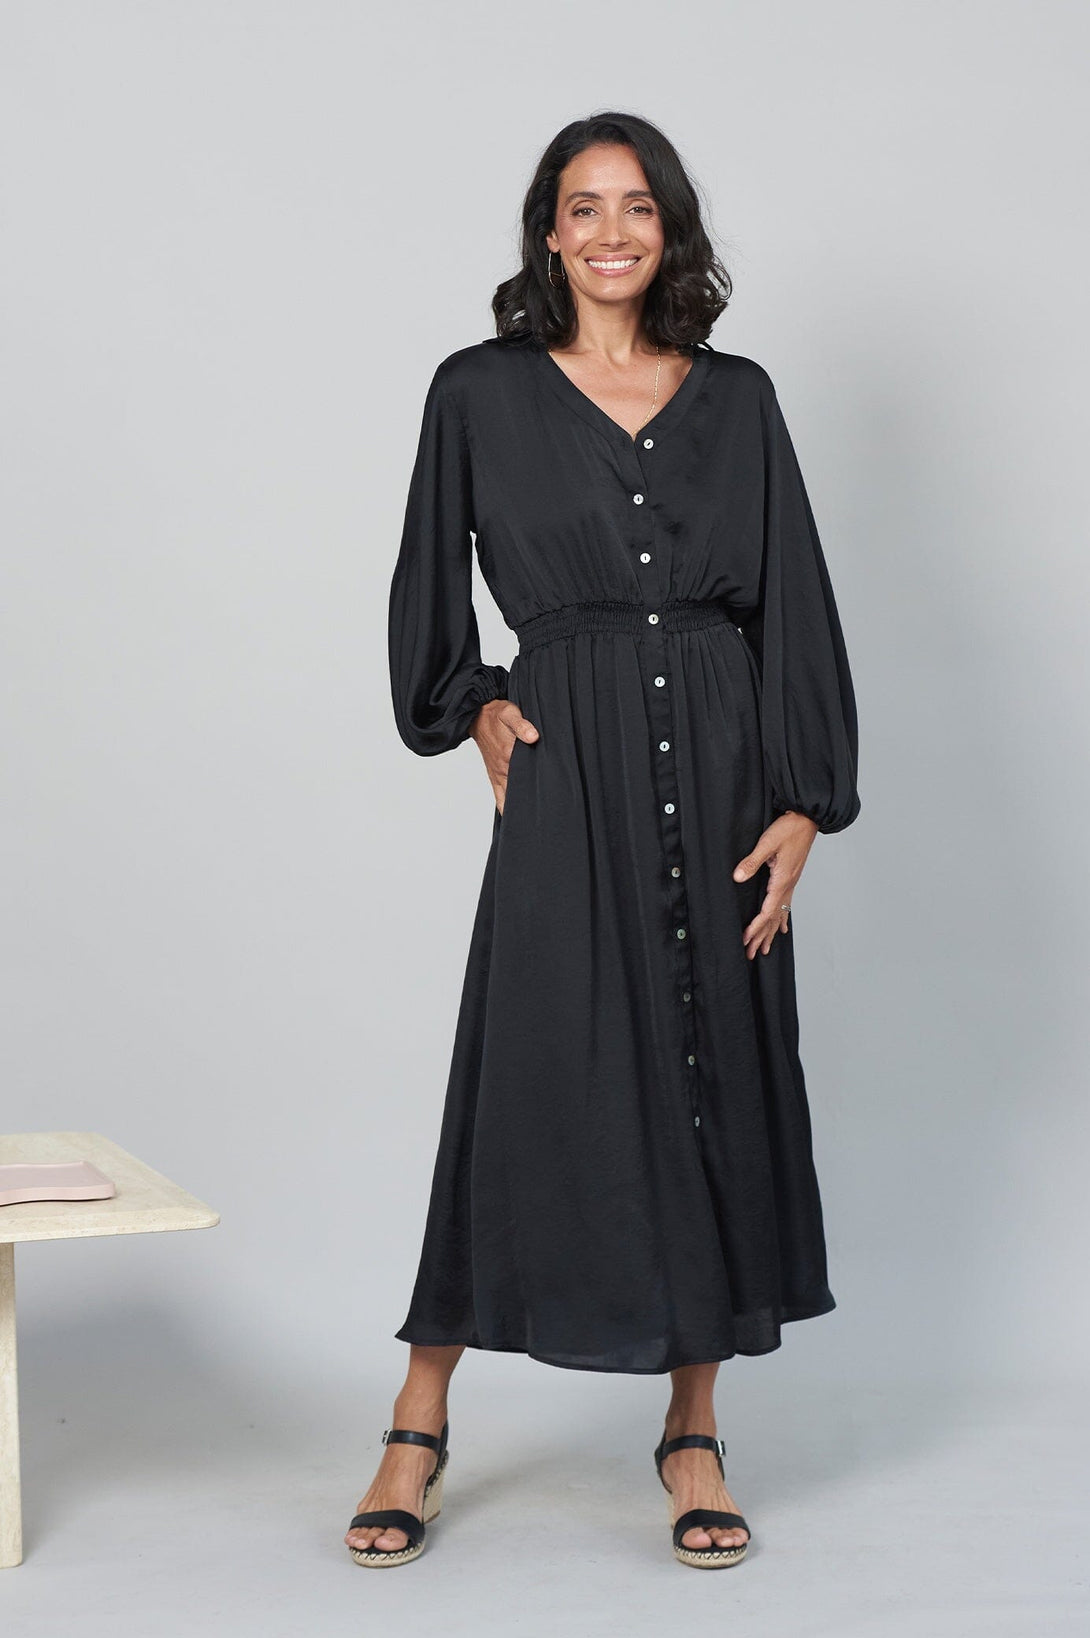 Georgina Long Sleeve Dress Black with Collar Dress